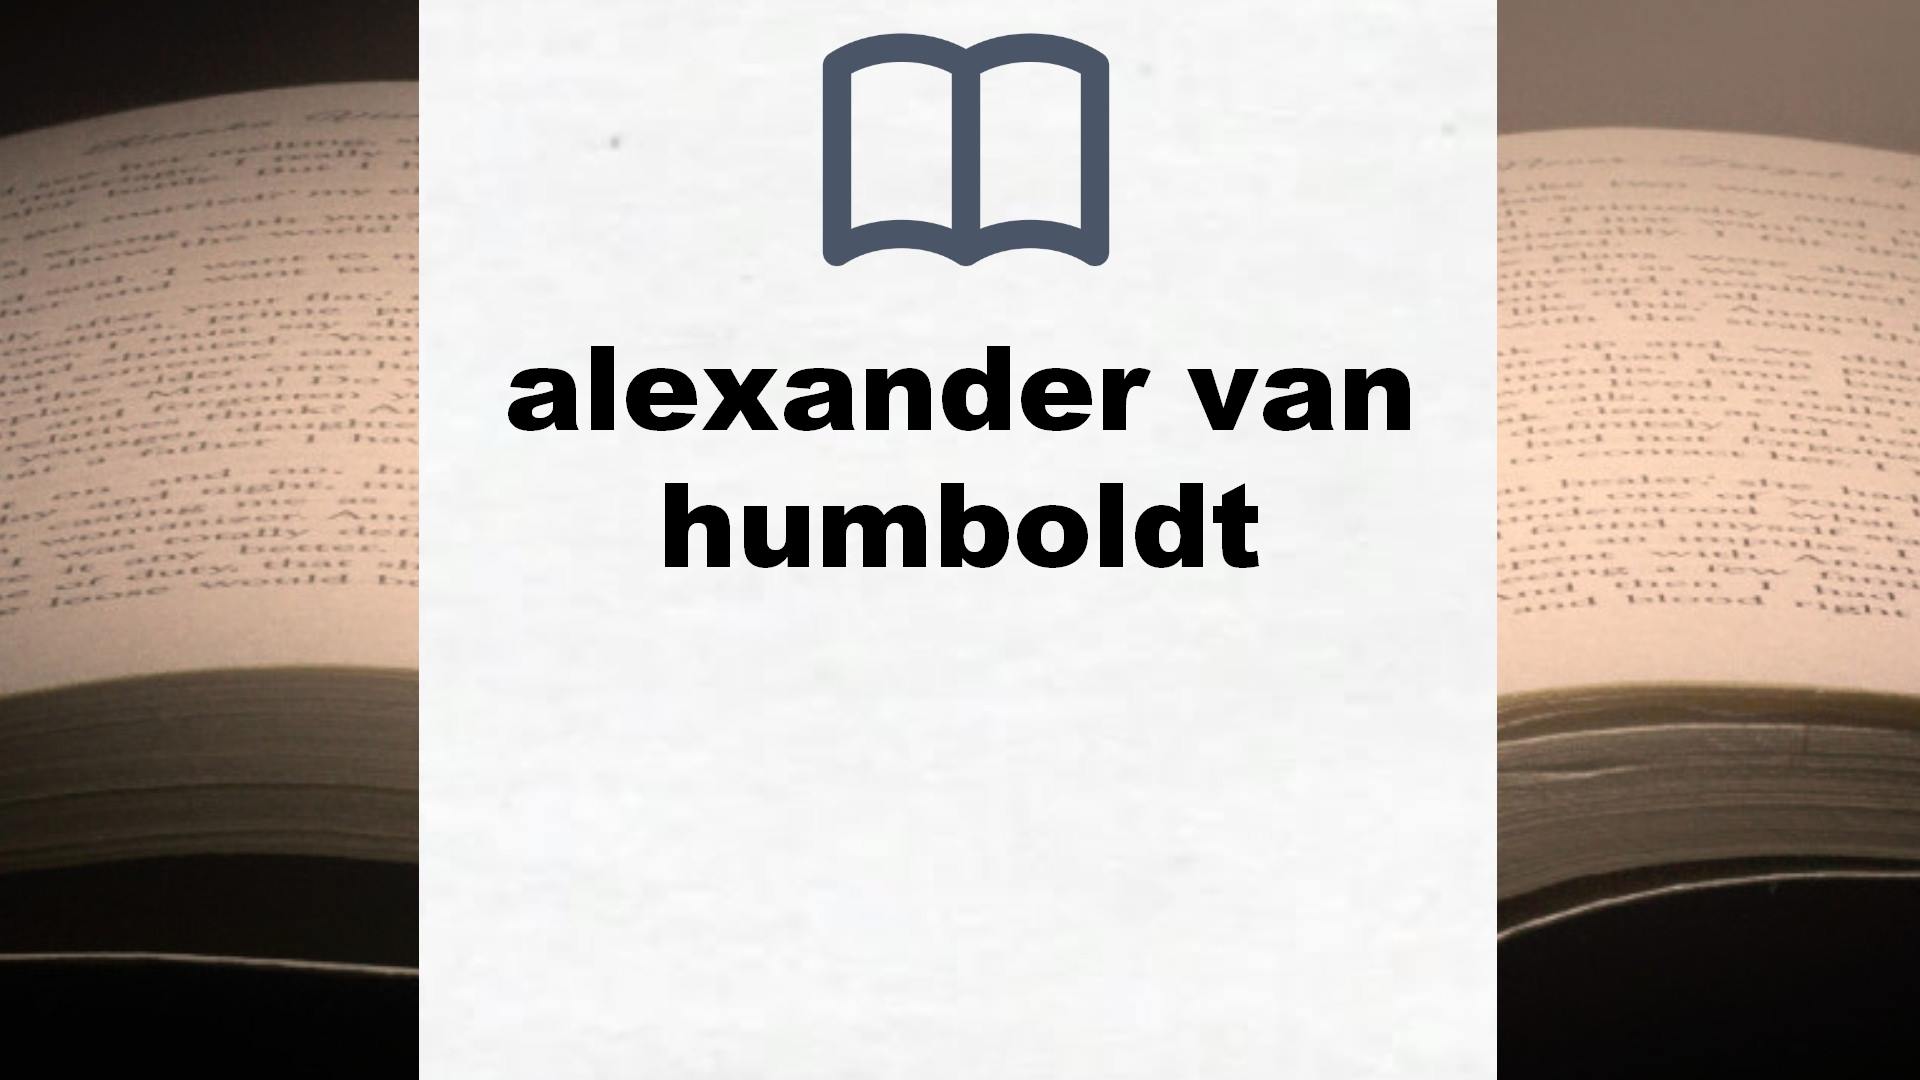 Libros sobre alexander van humboldt